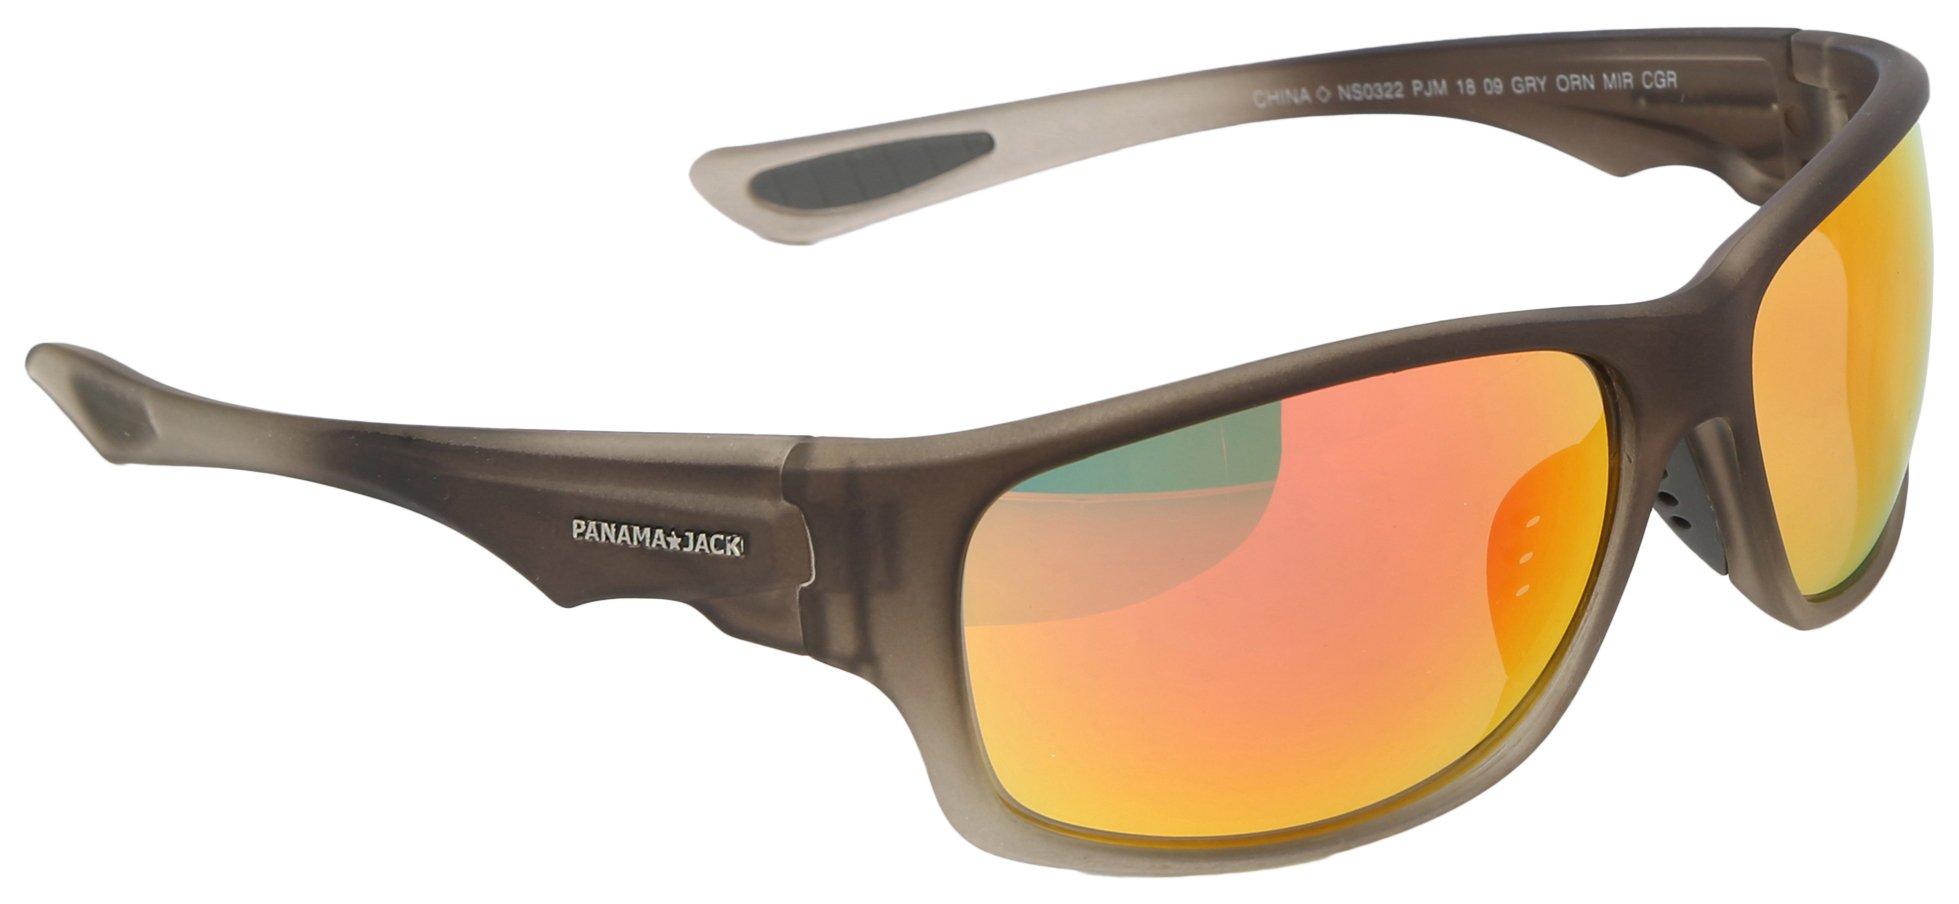 Panama Jack Mens Sport Mirror Sunglasses